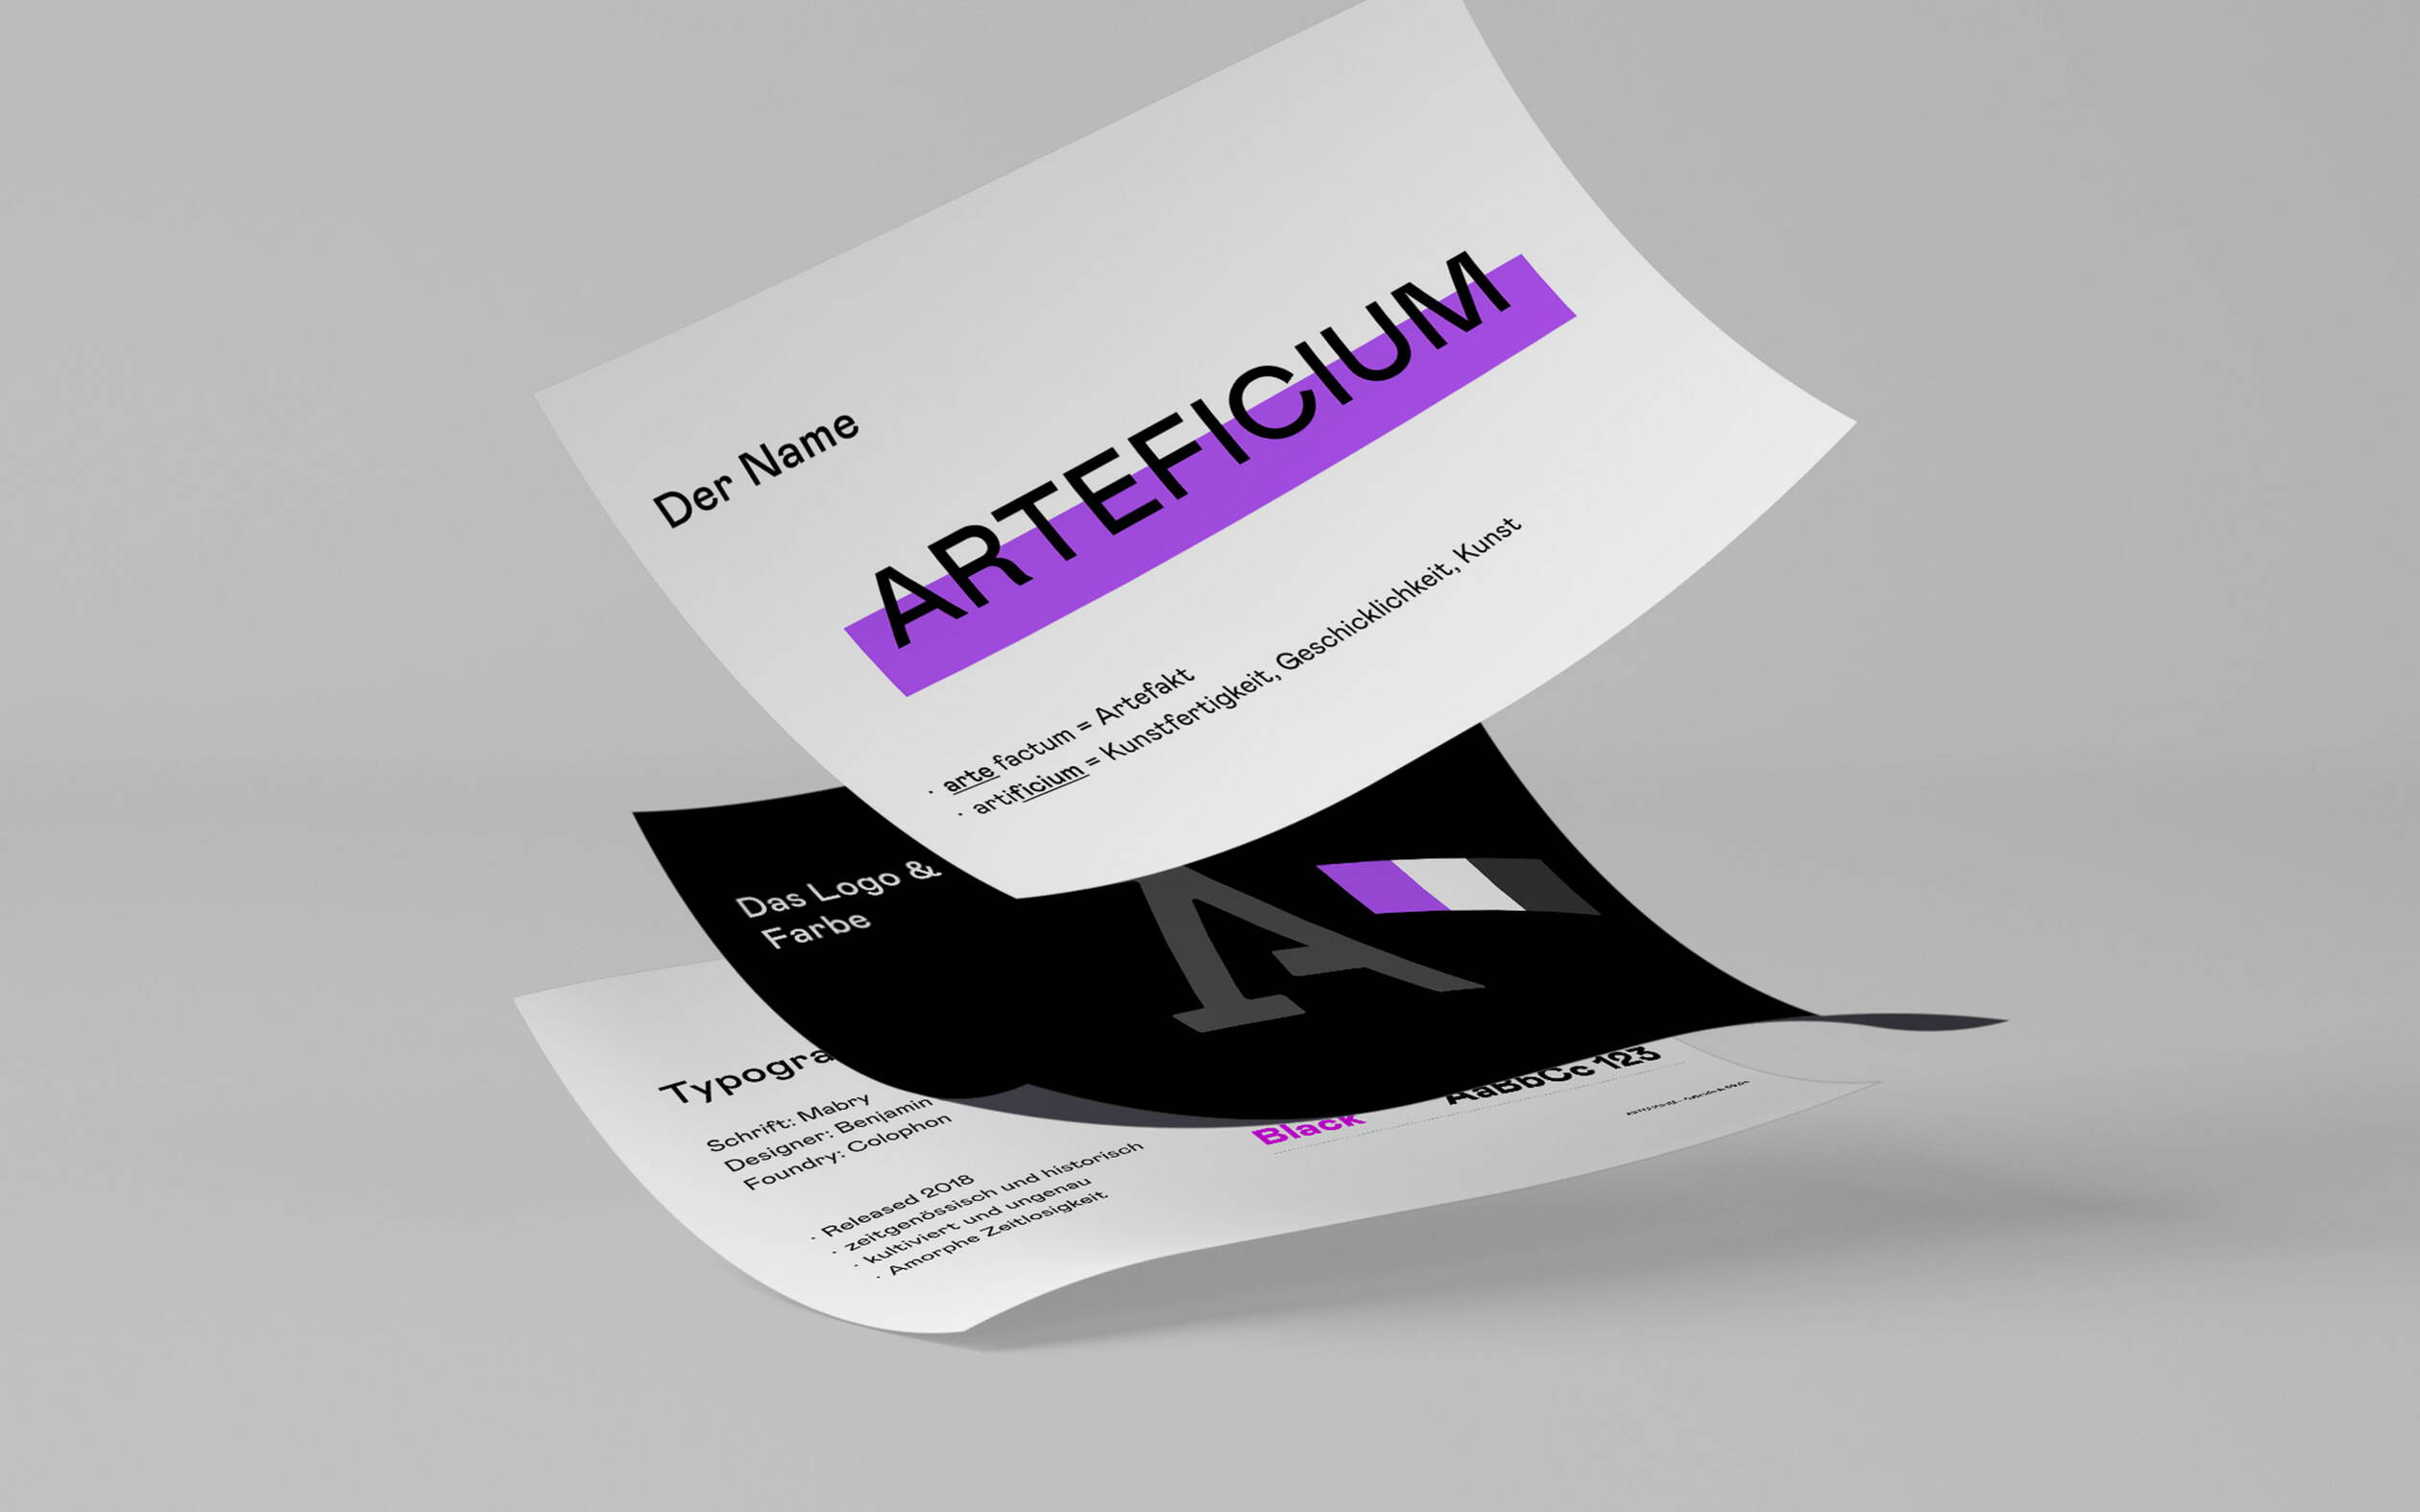 gabriela-martinelli-design_work_arteficium_corporate_design.jpg